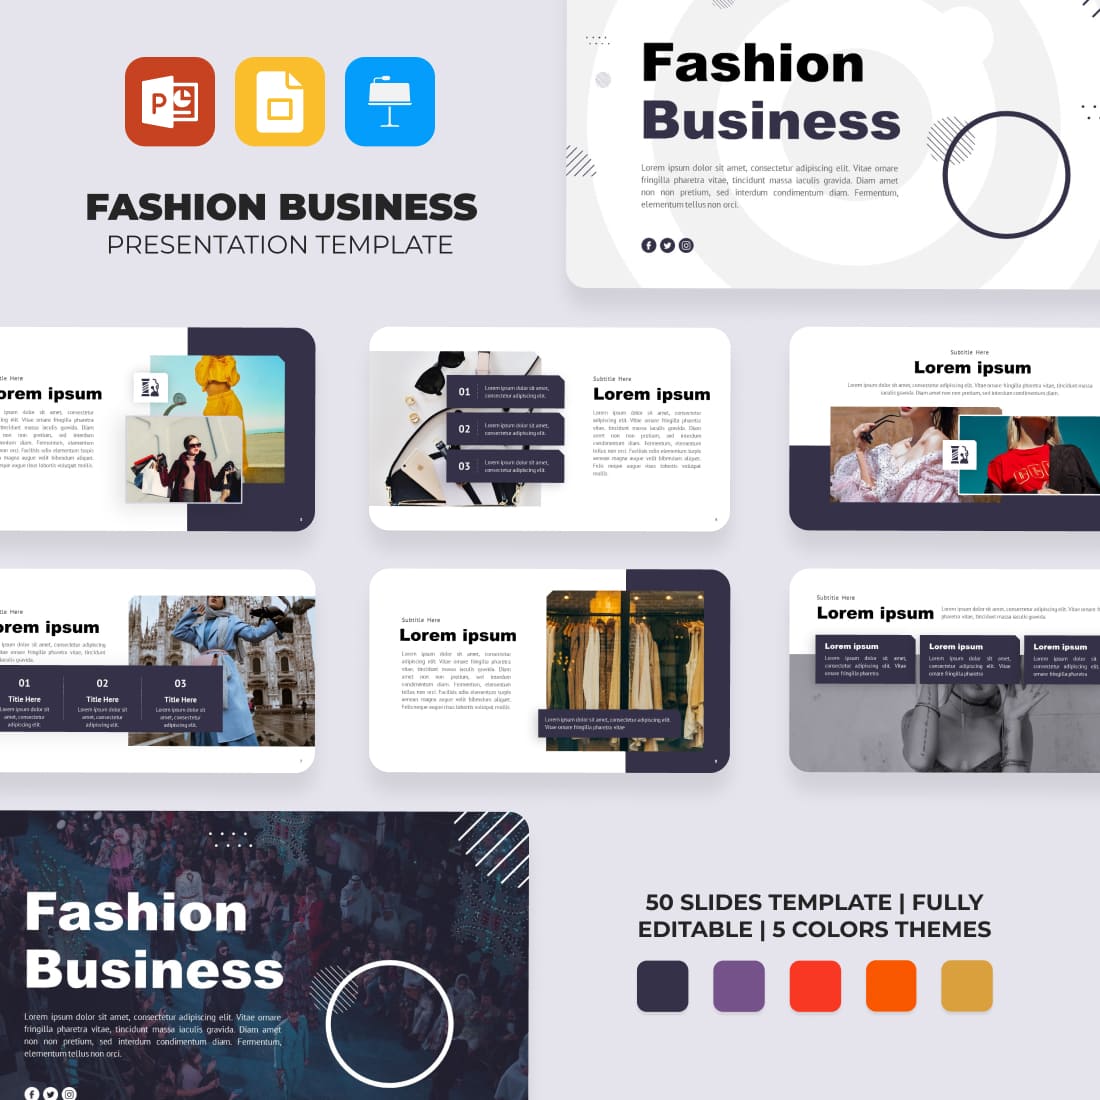 Fashion Business Presentation Template cover.